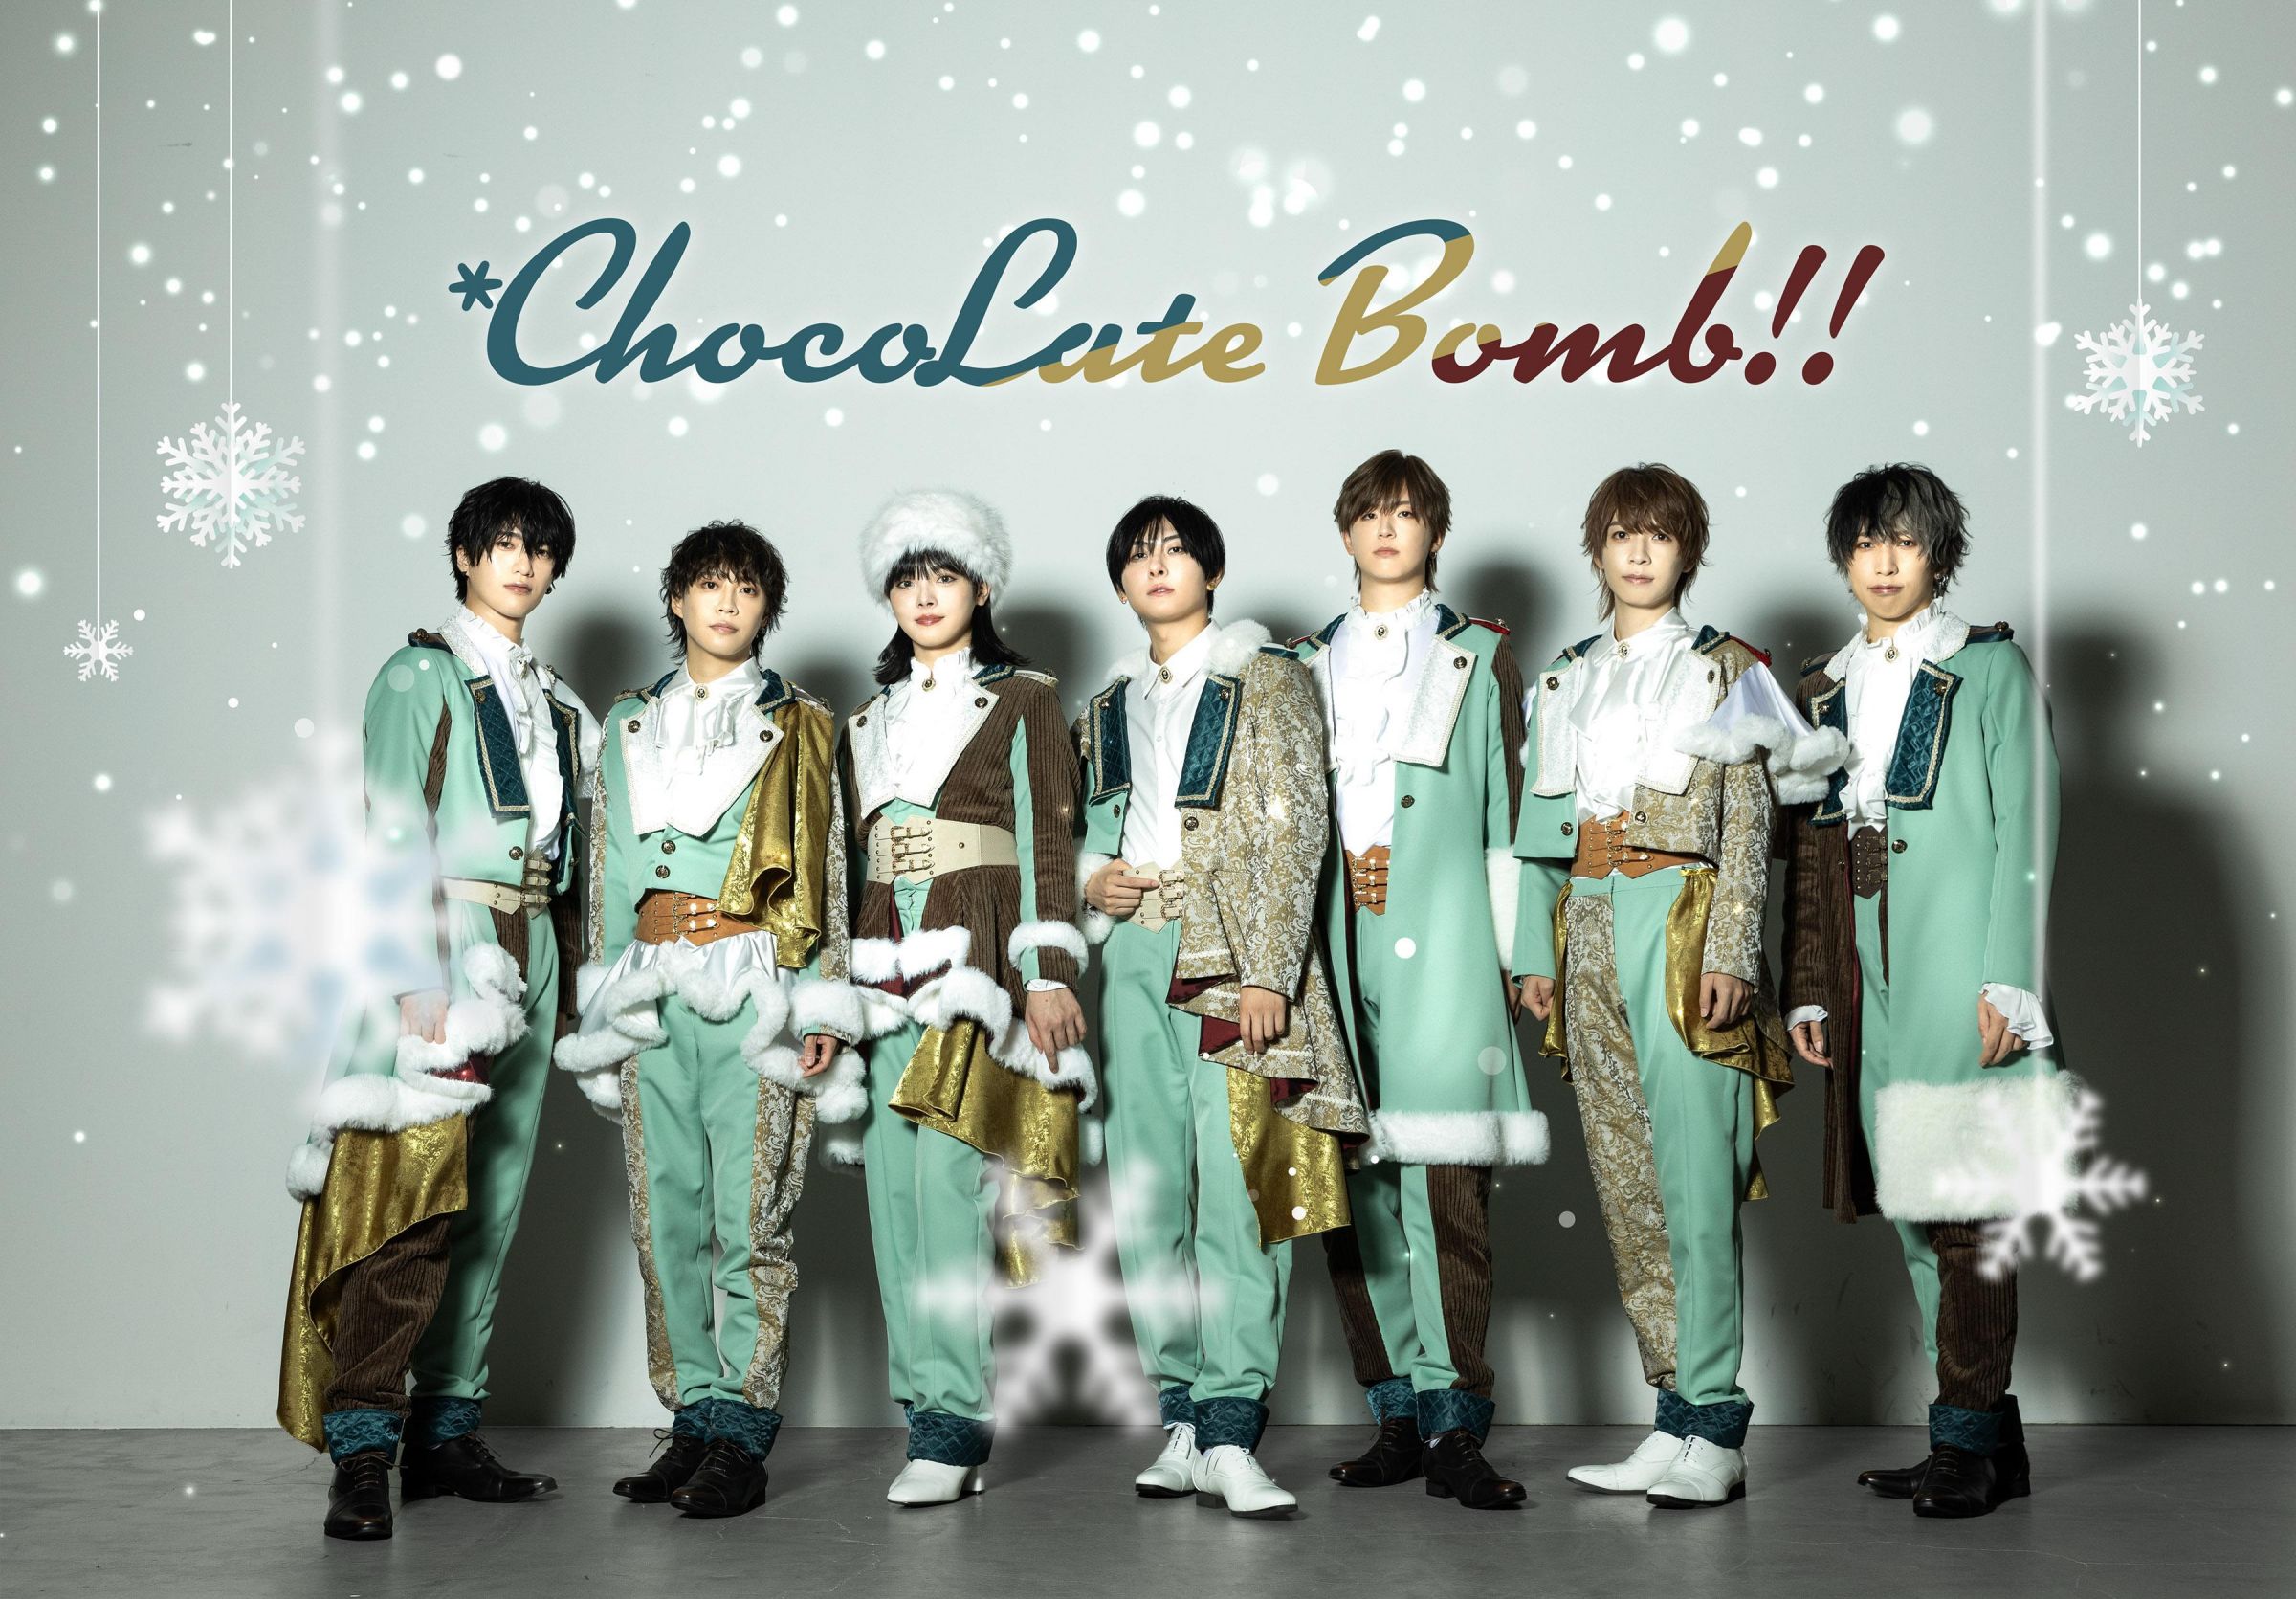 *ChocoLate Bomb!!│*Choco Lovers!!